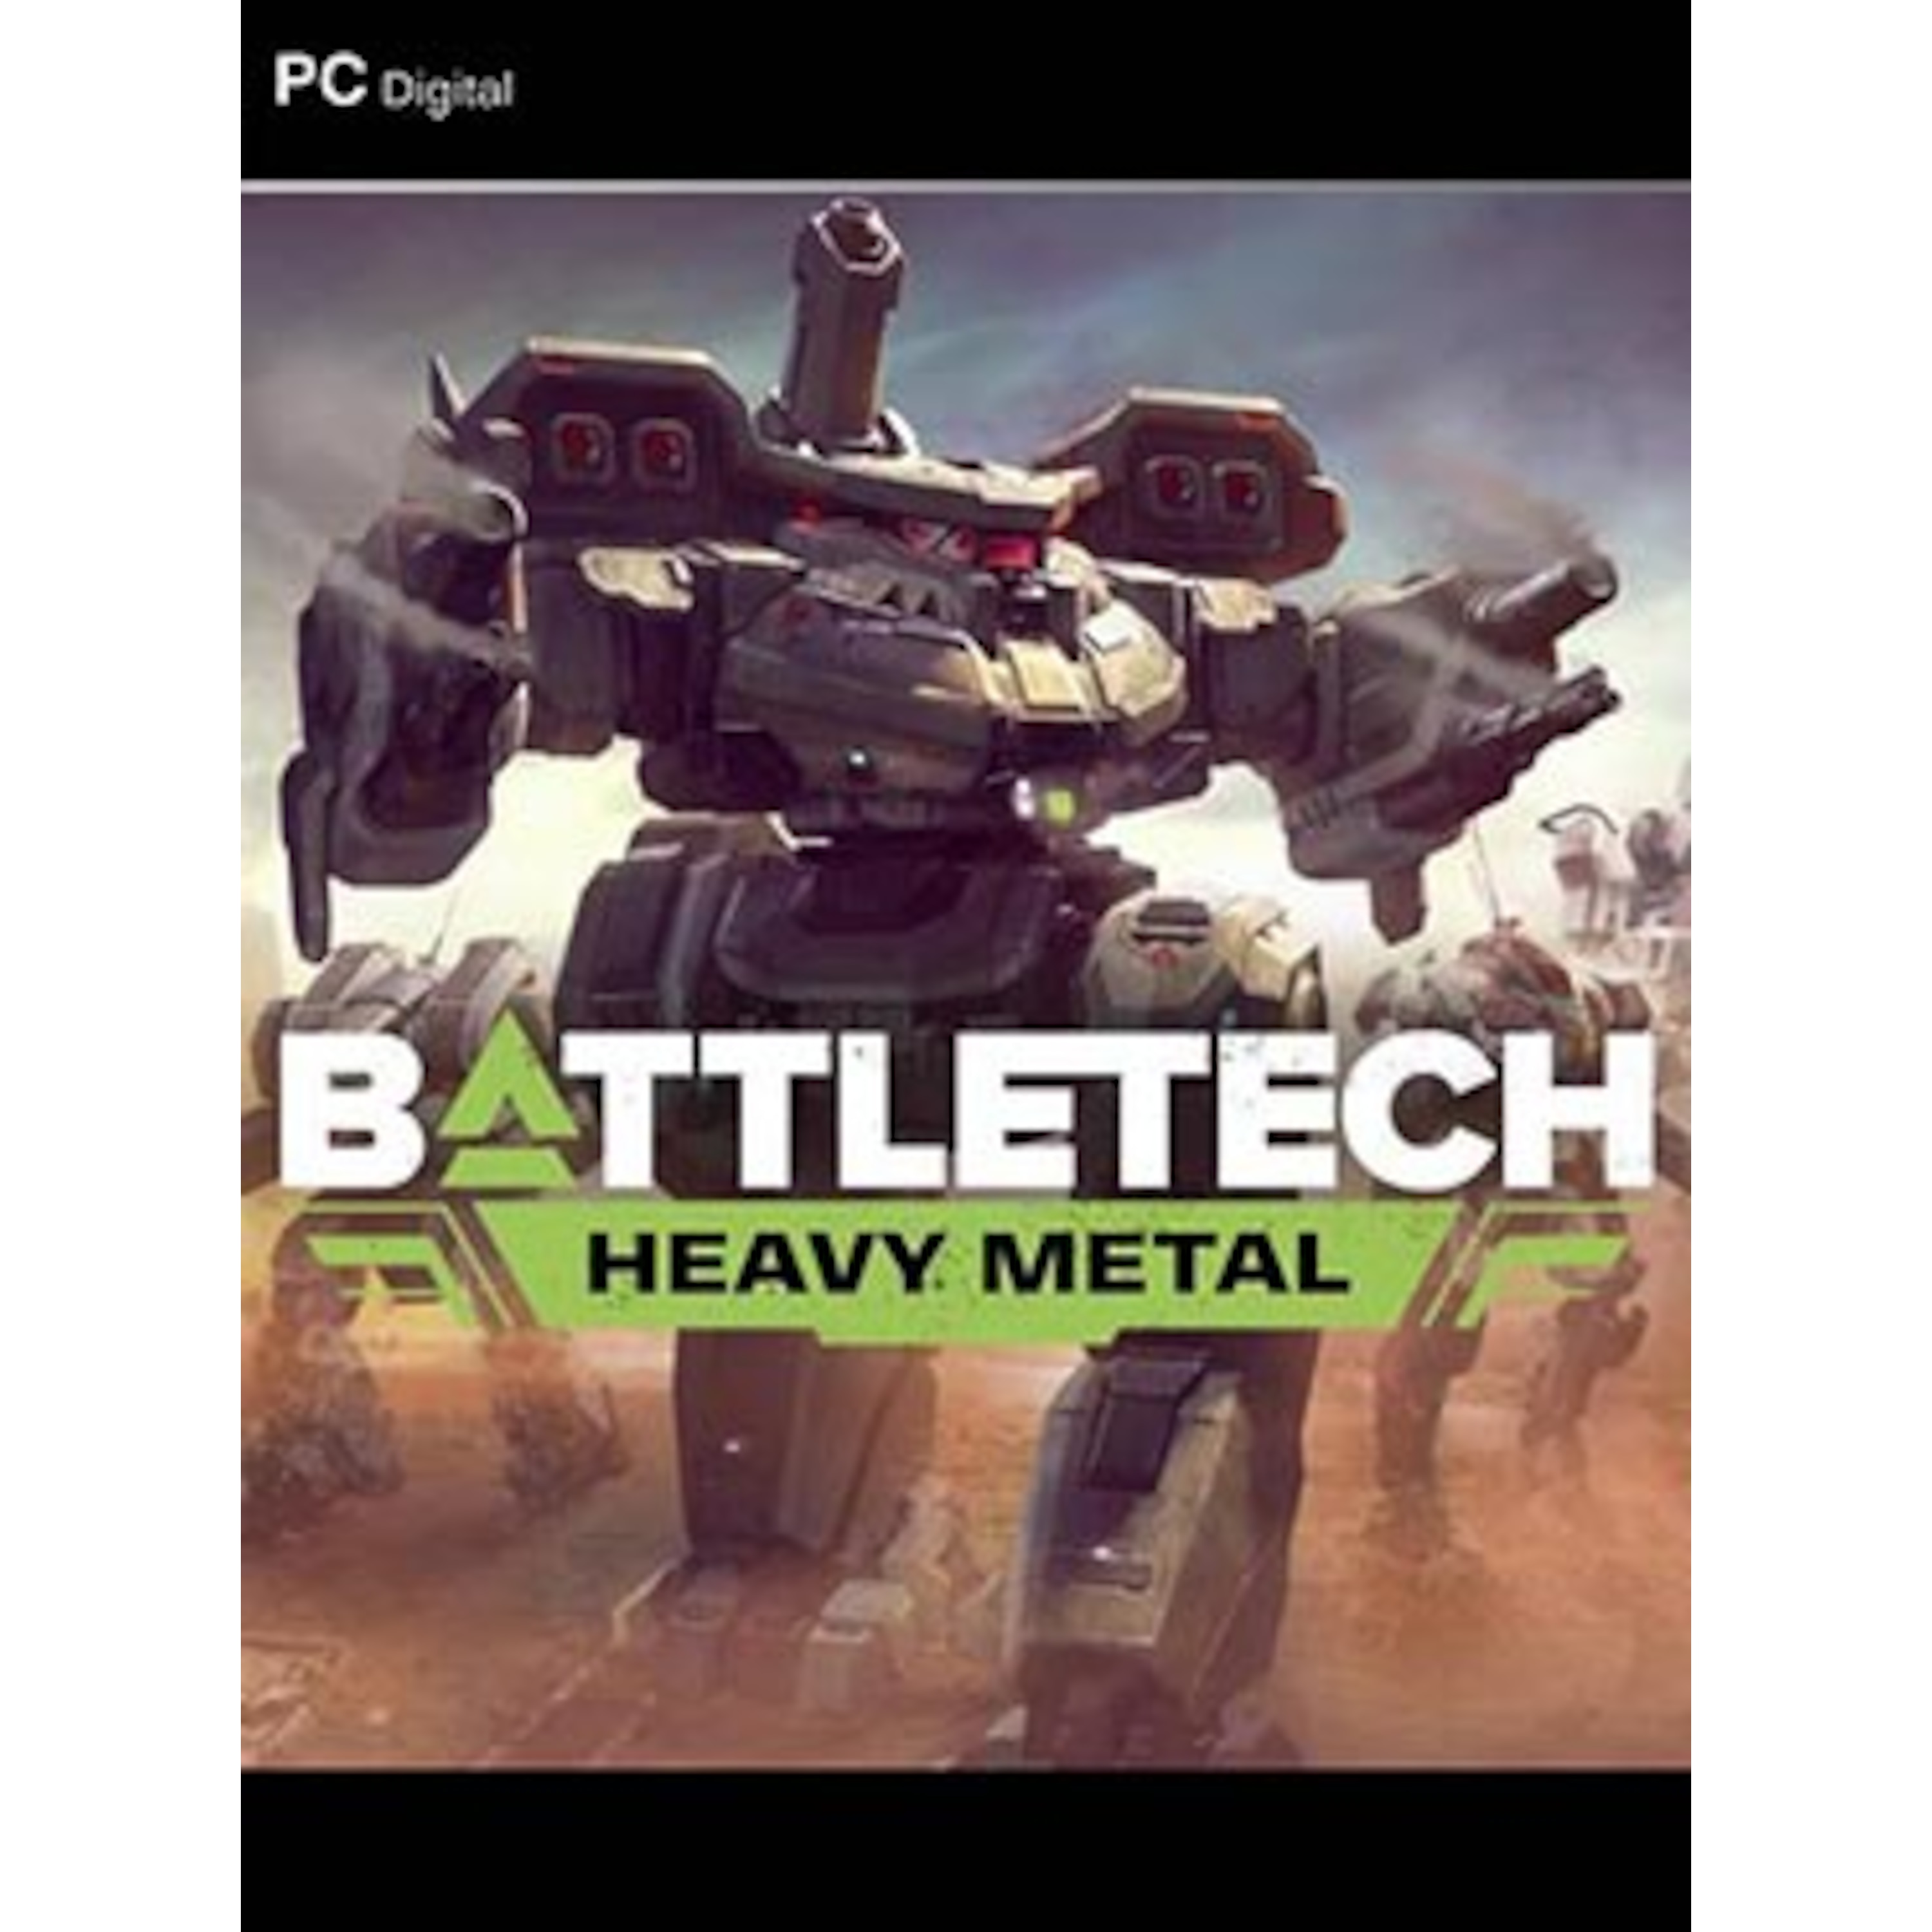 battletech heavy metal features